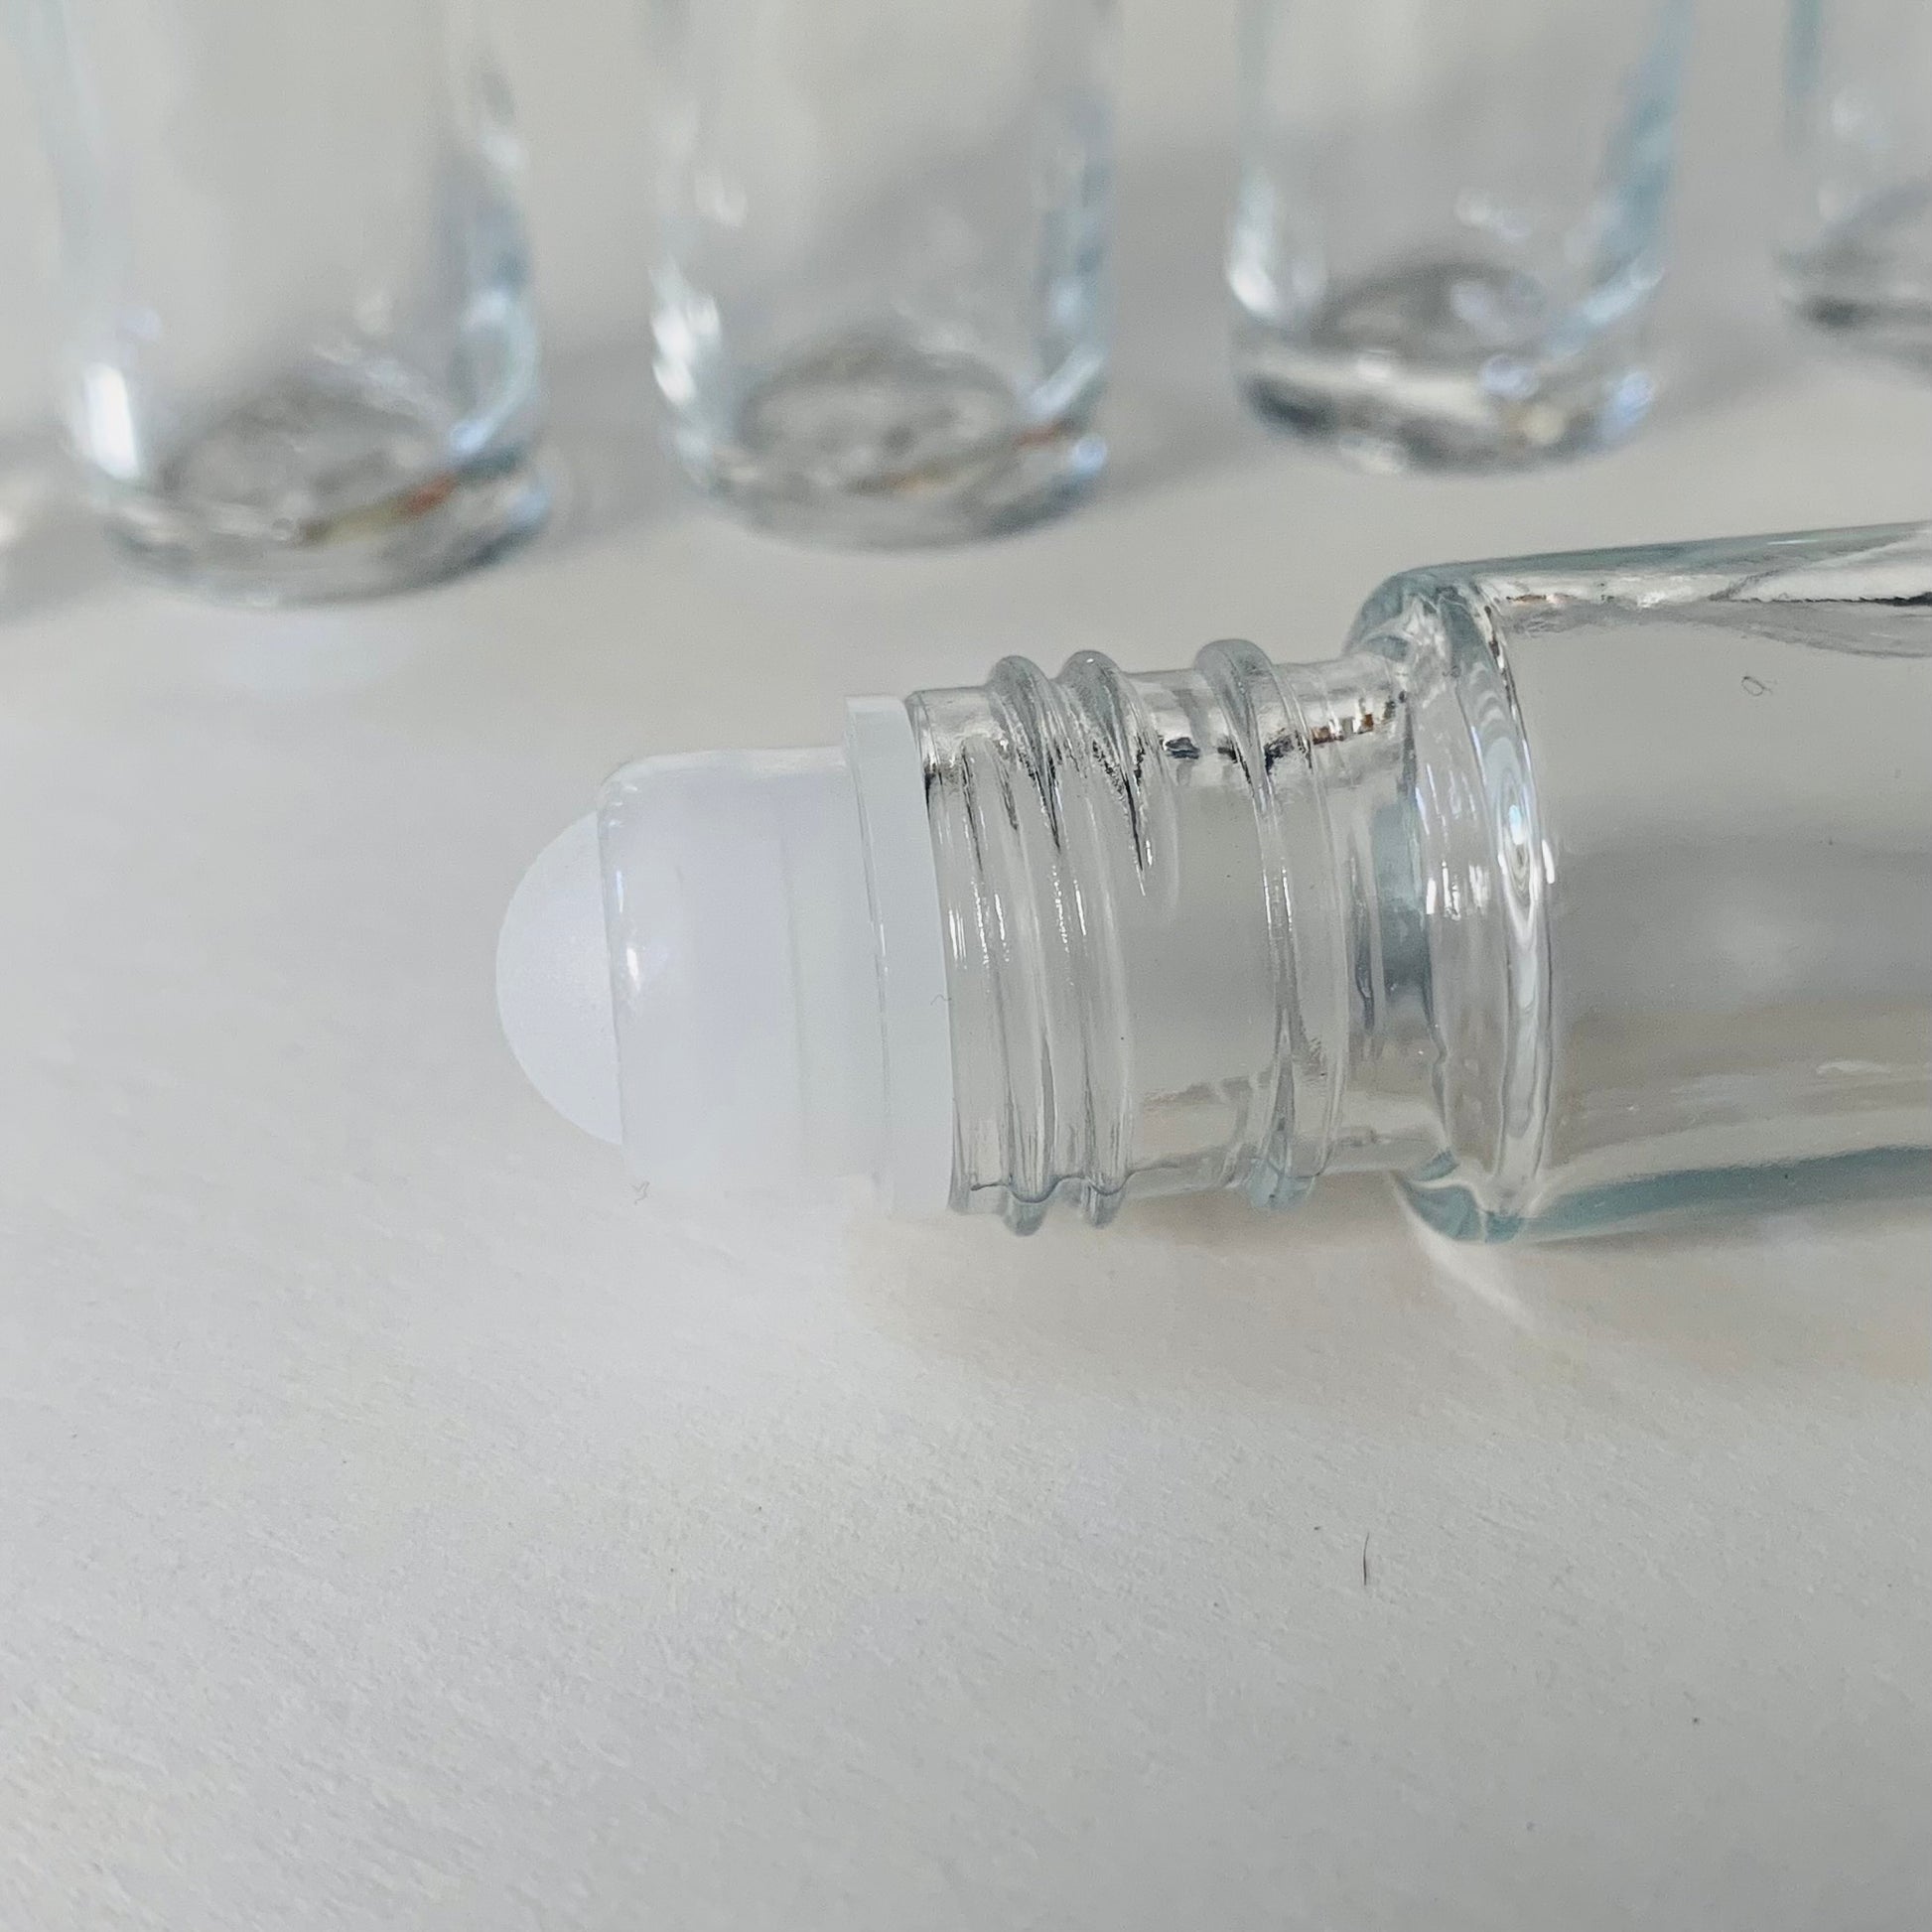 0.33 oz Clear Glass Oblong Roll-On Bottles (White PP Cap) - Clear Type I